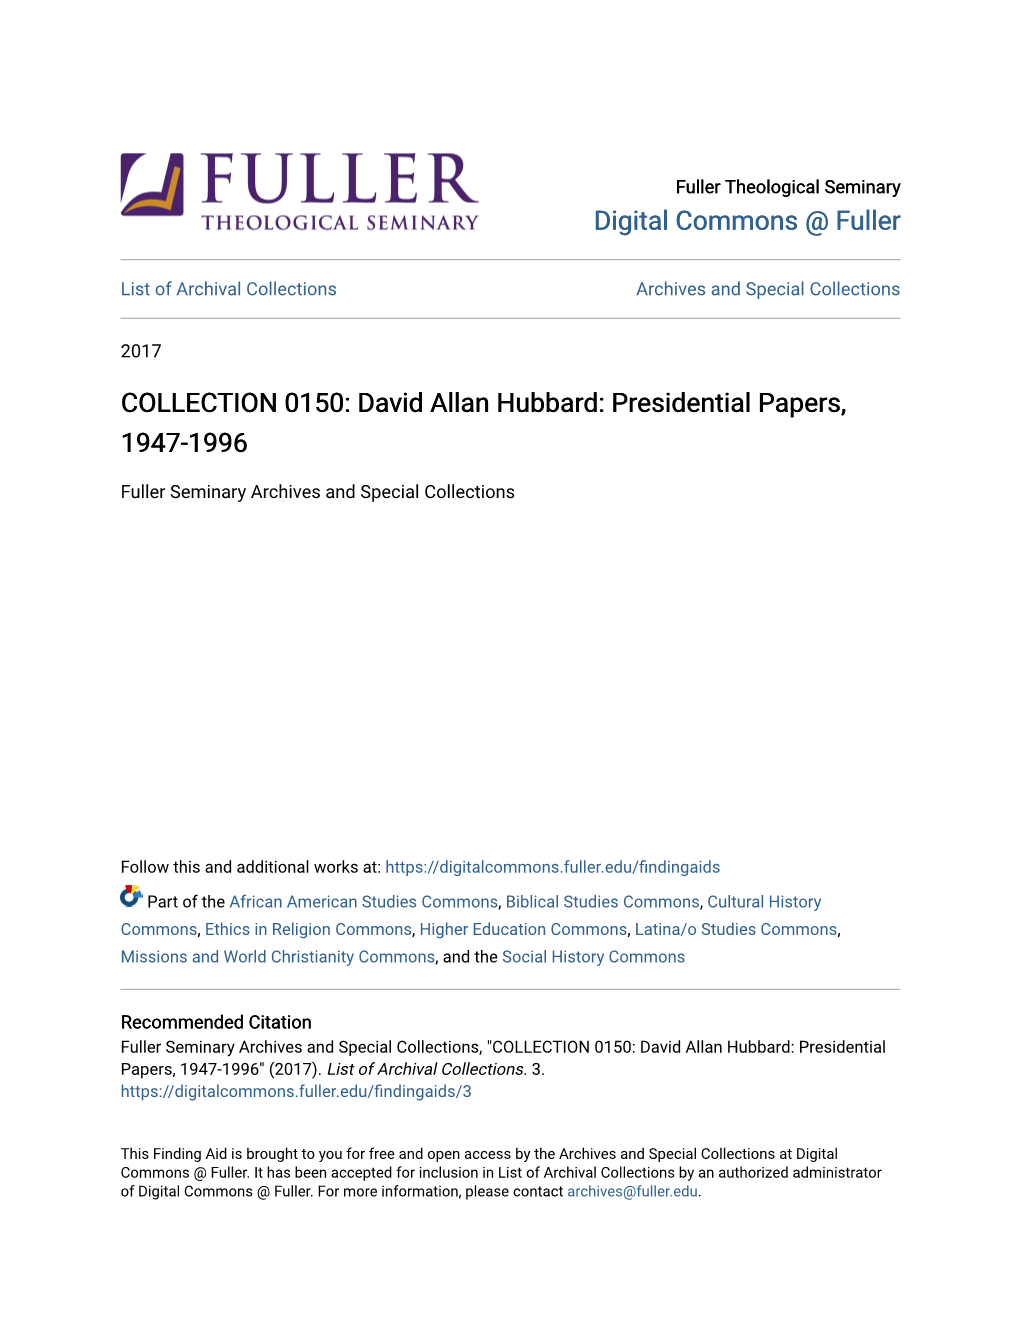 David Allan Hubbard: Presidential Papers, 1947-1996